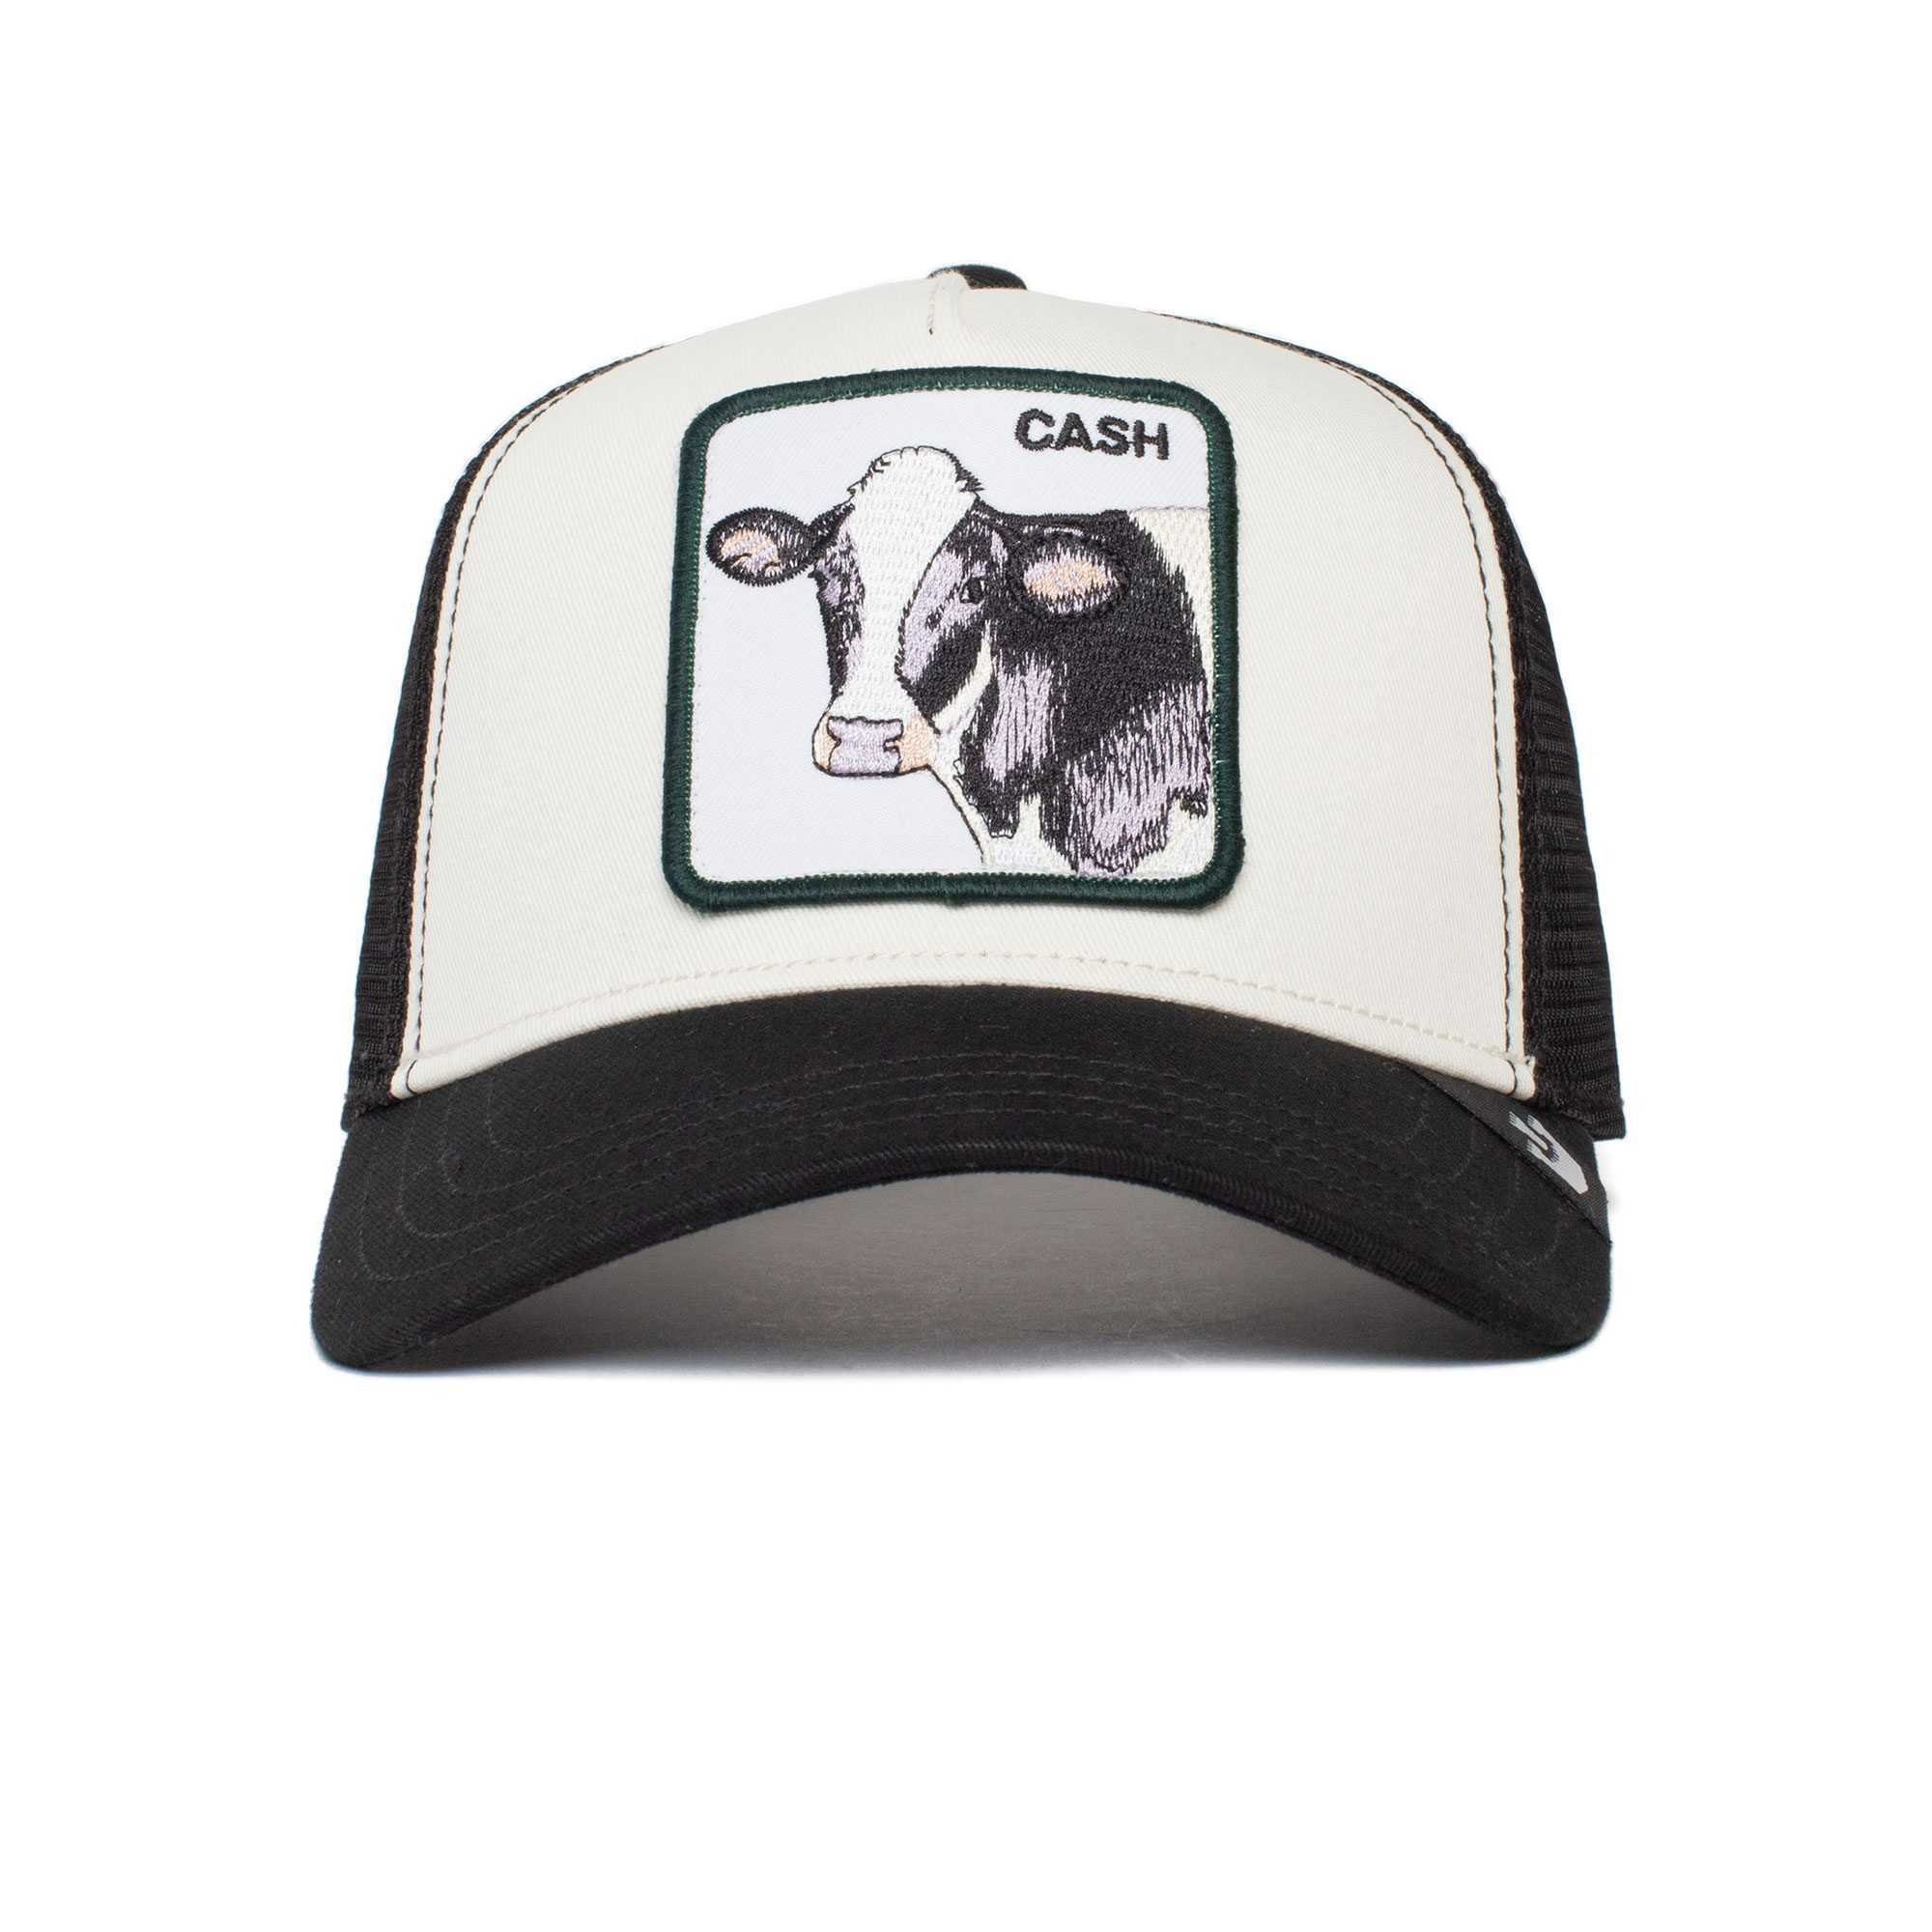 Frontpatch, The Unisex One Bros. Cap Cap Size GOORIN Trucker Kappe, Baseball - Cash Cow